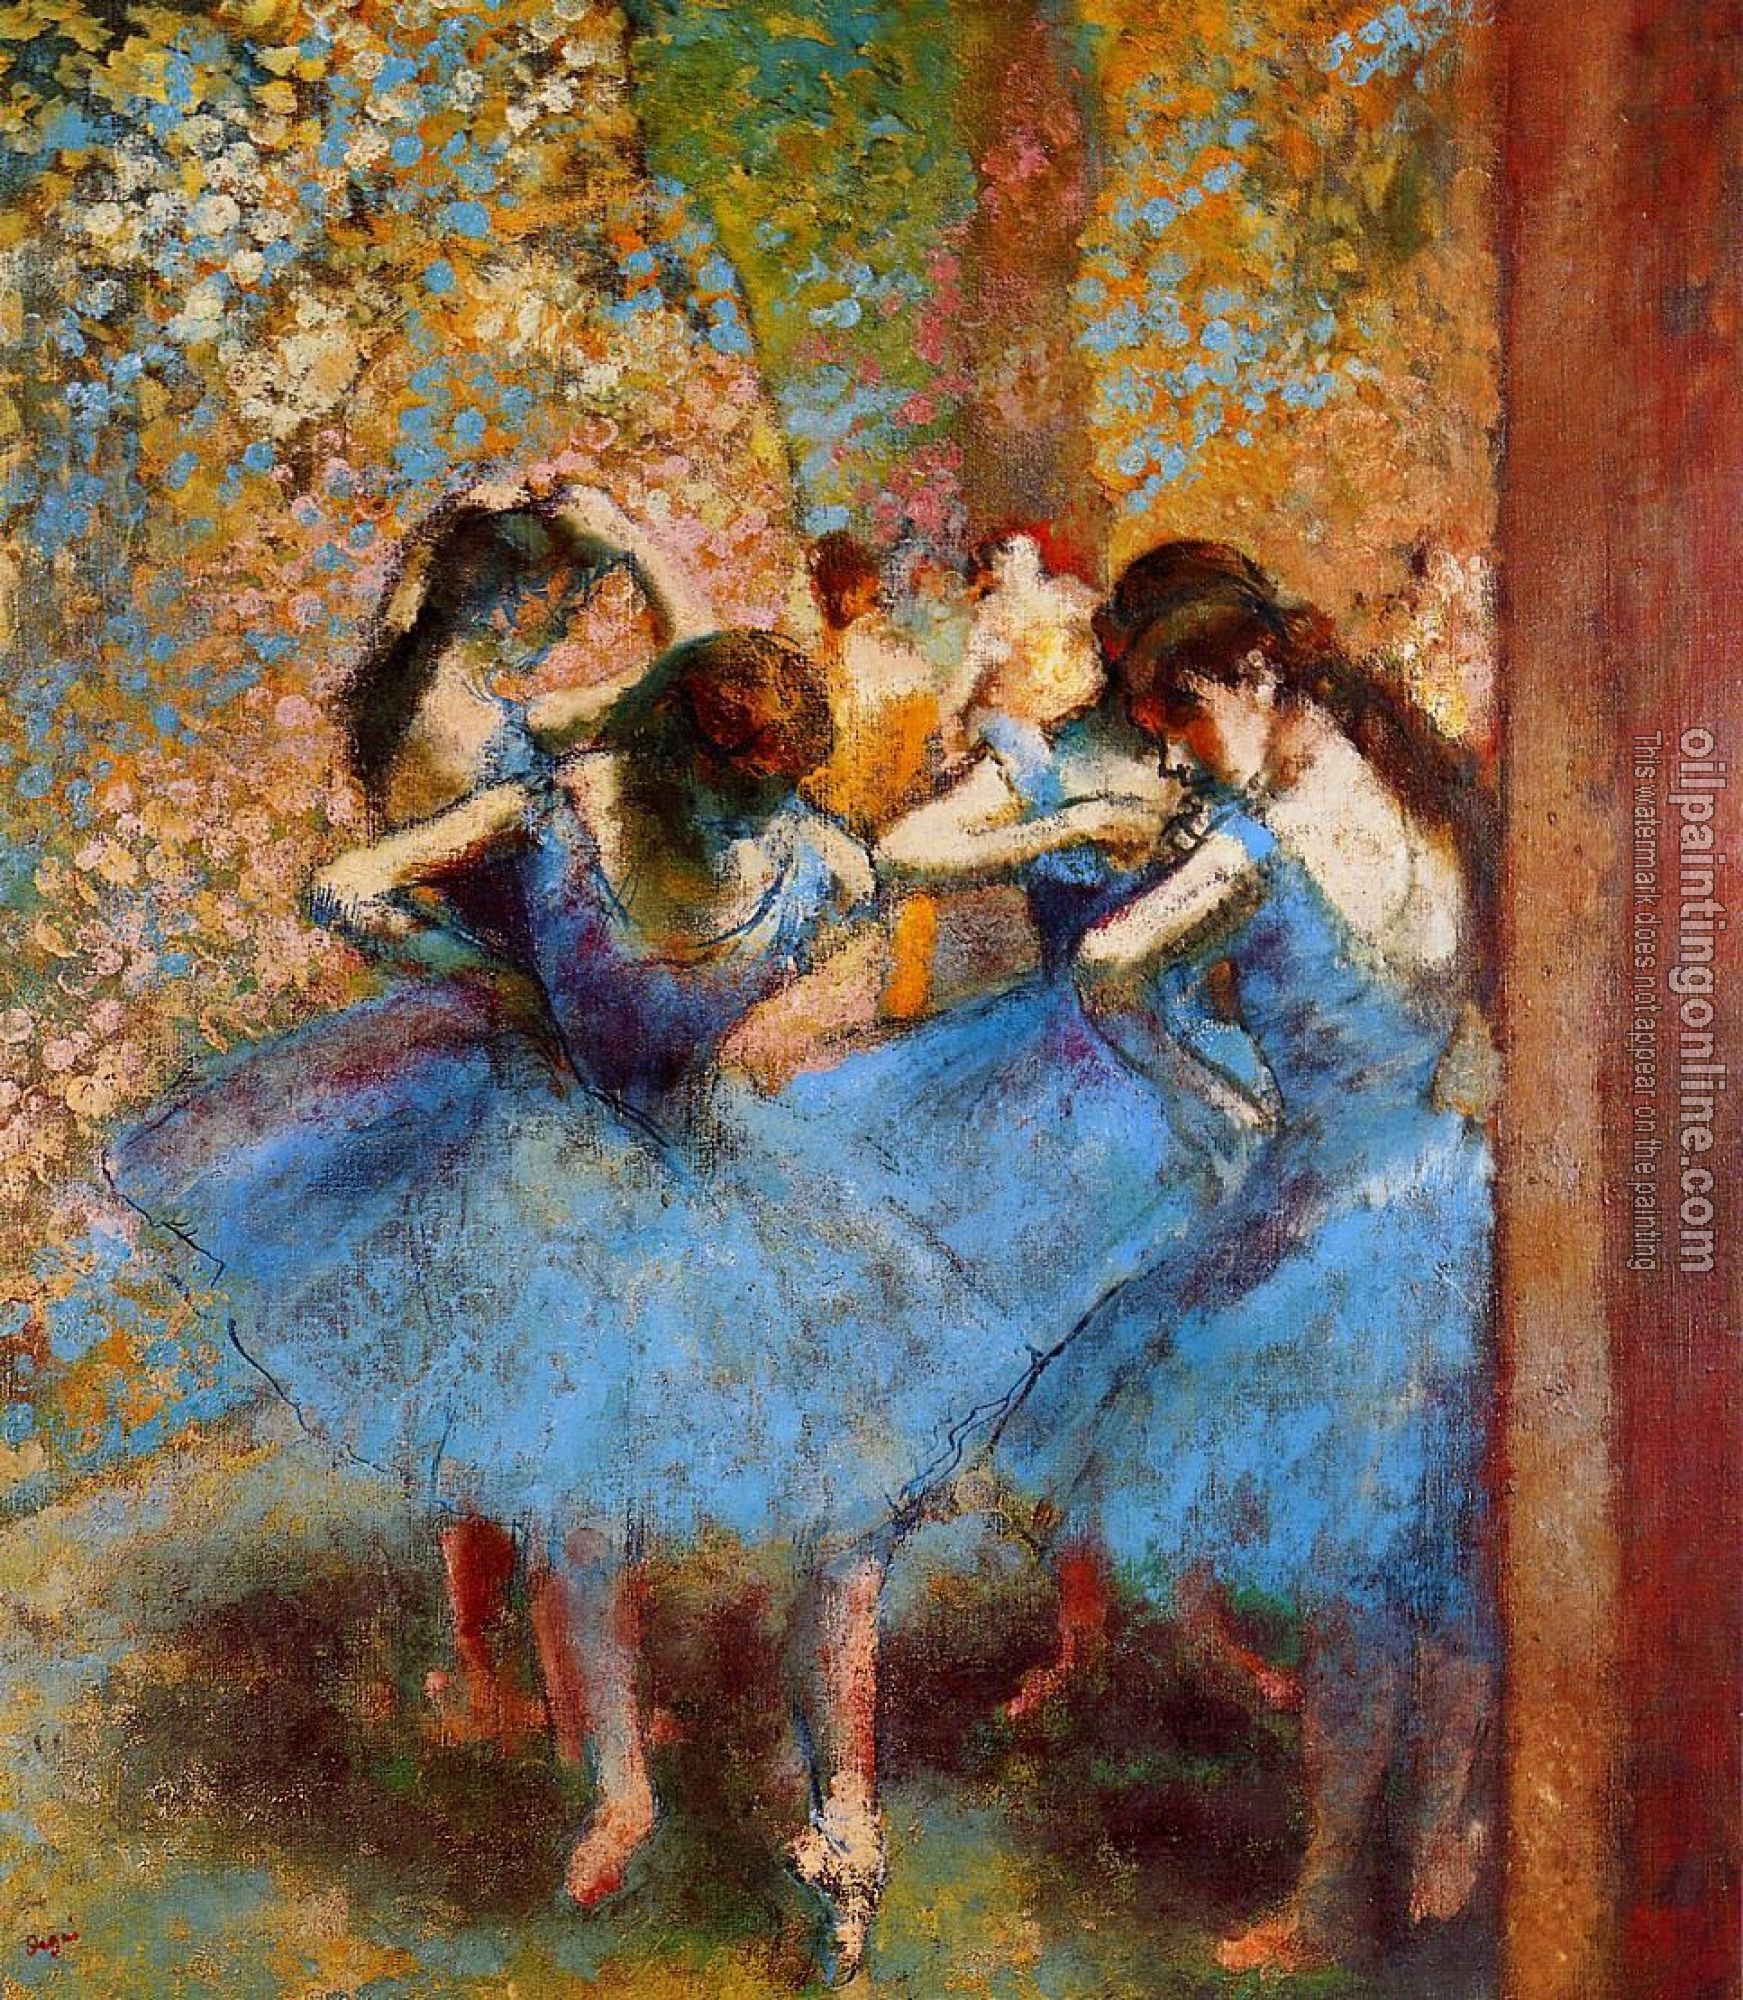 Degas, Edgar - Dancers in Blue